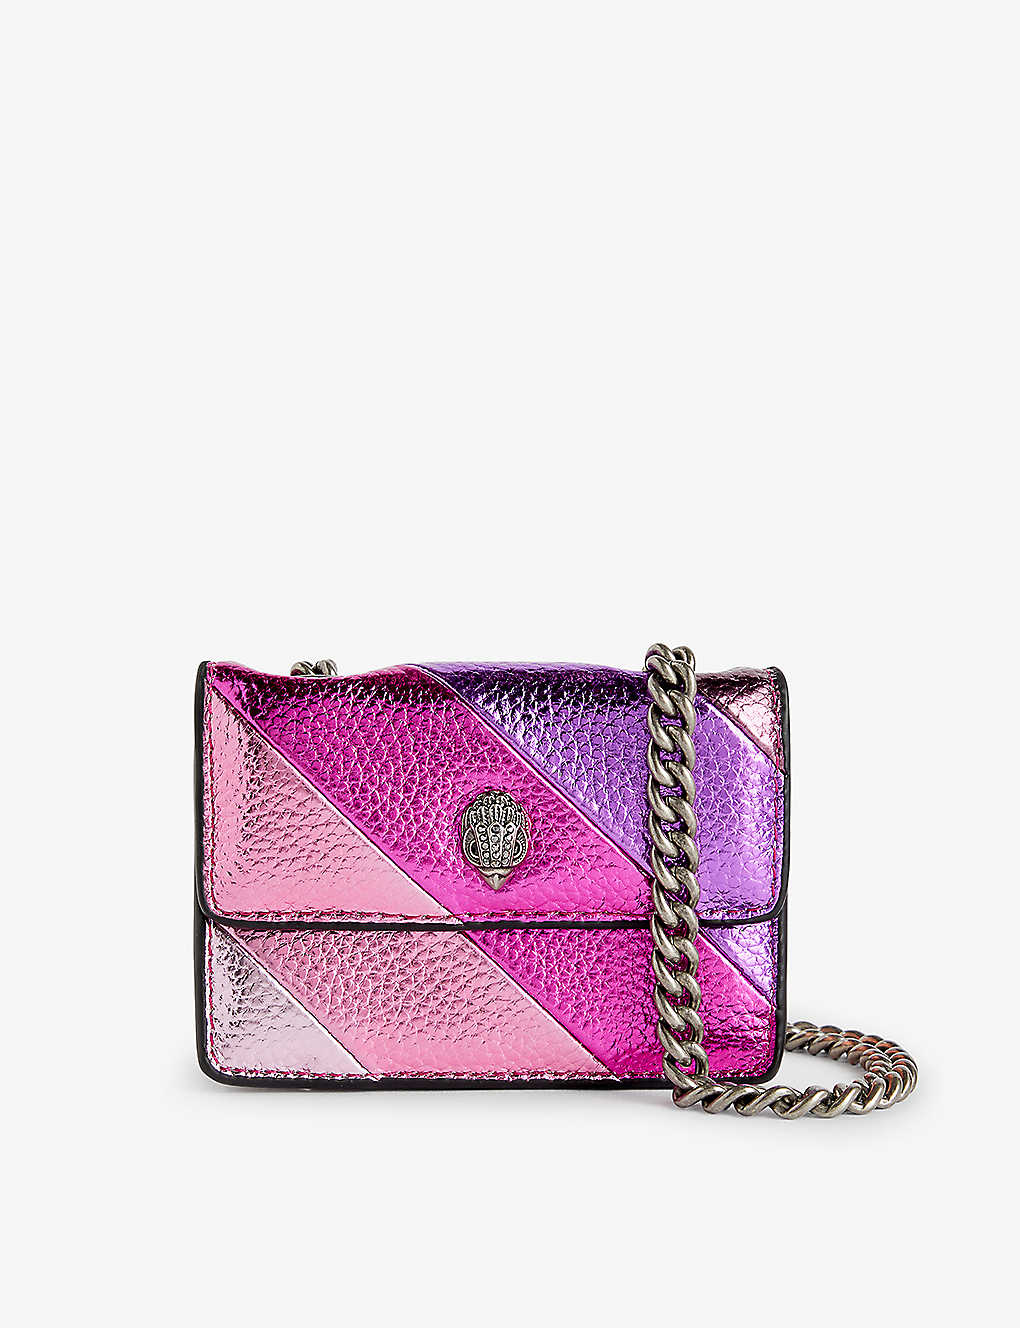 Kurt Geiger London Womens Pink Comb Micro Kensington Faux-leather Clutch Bag